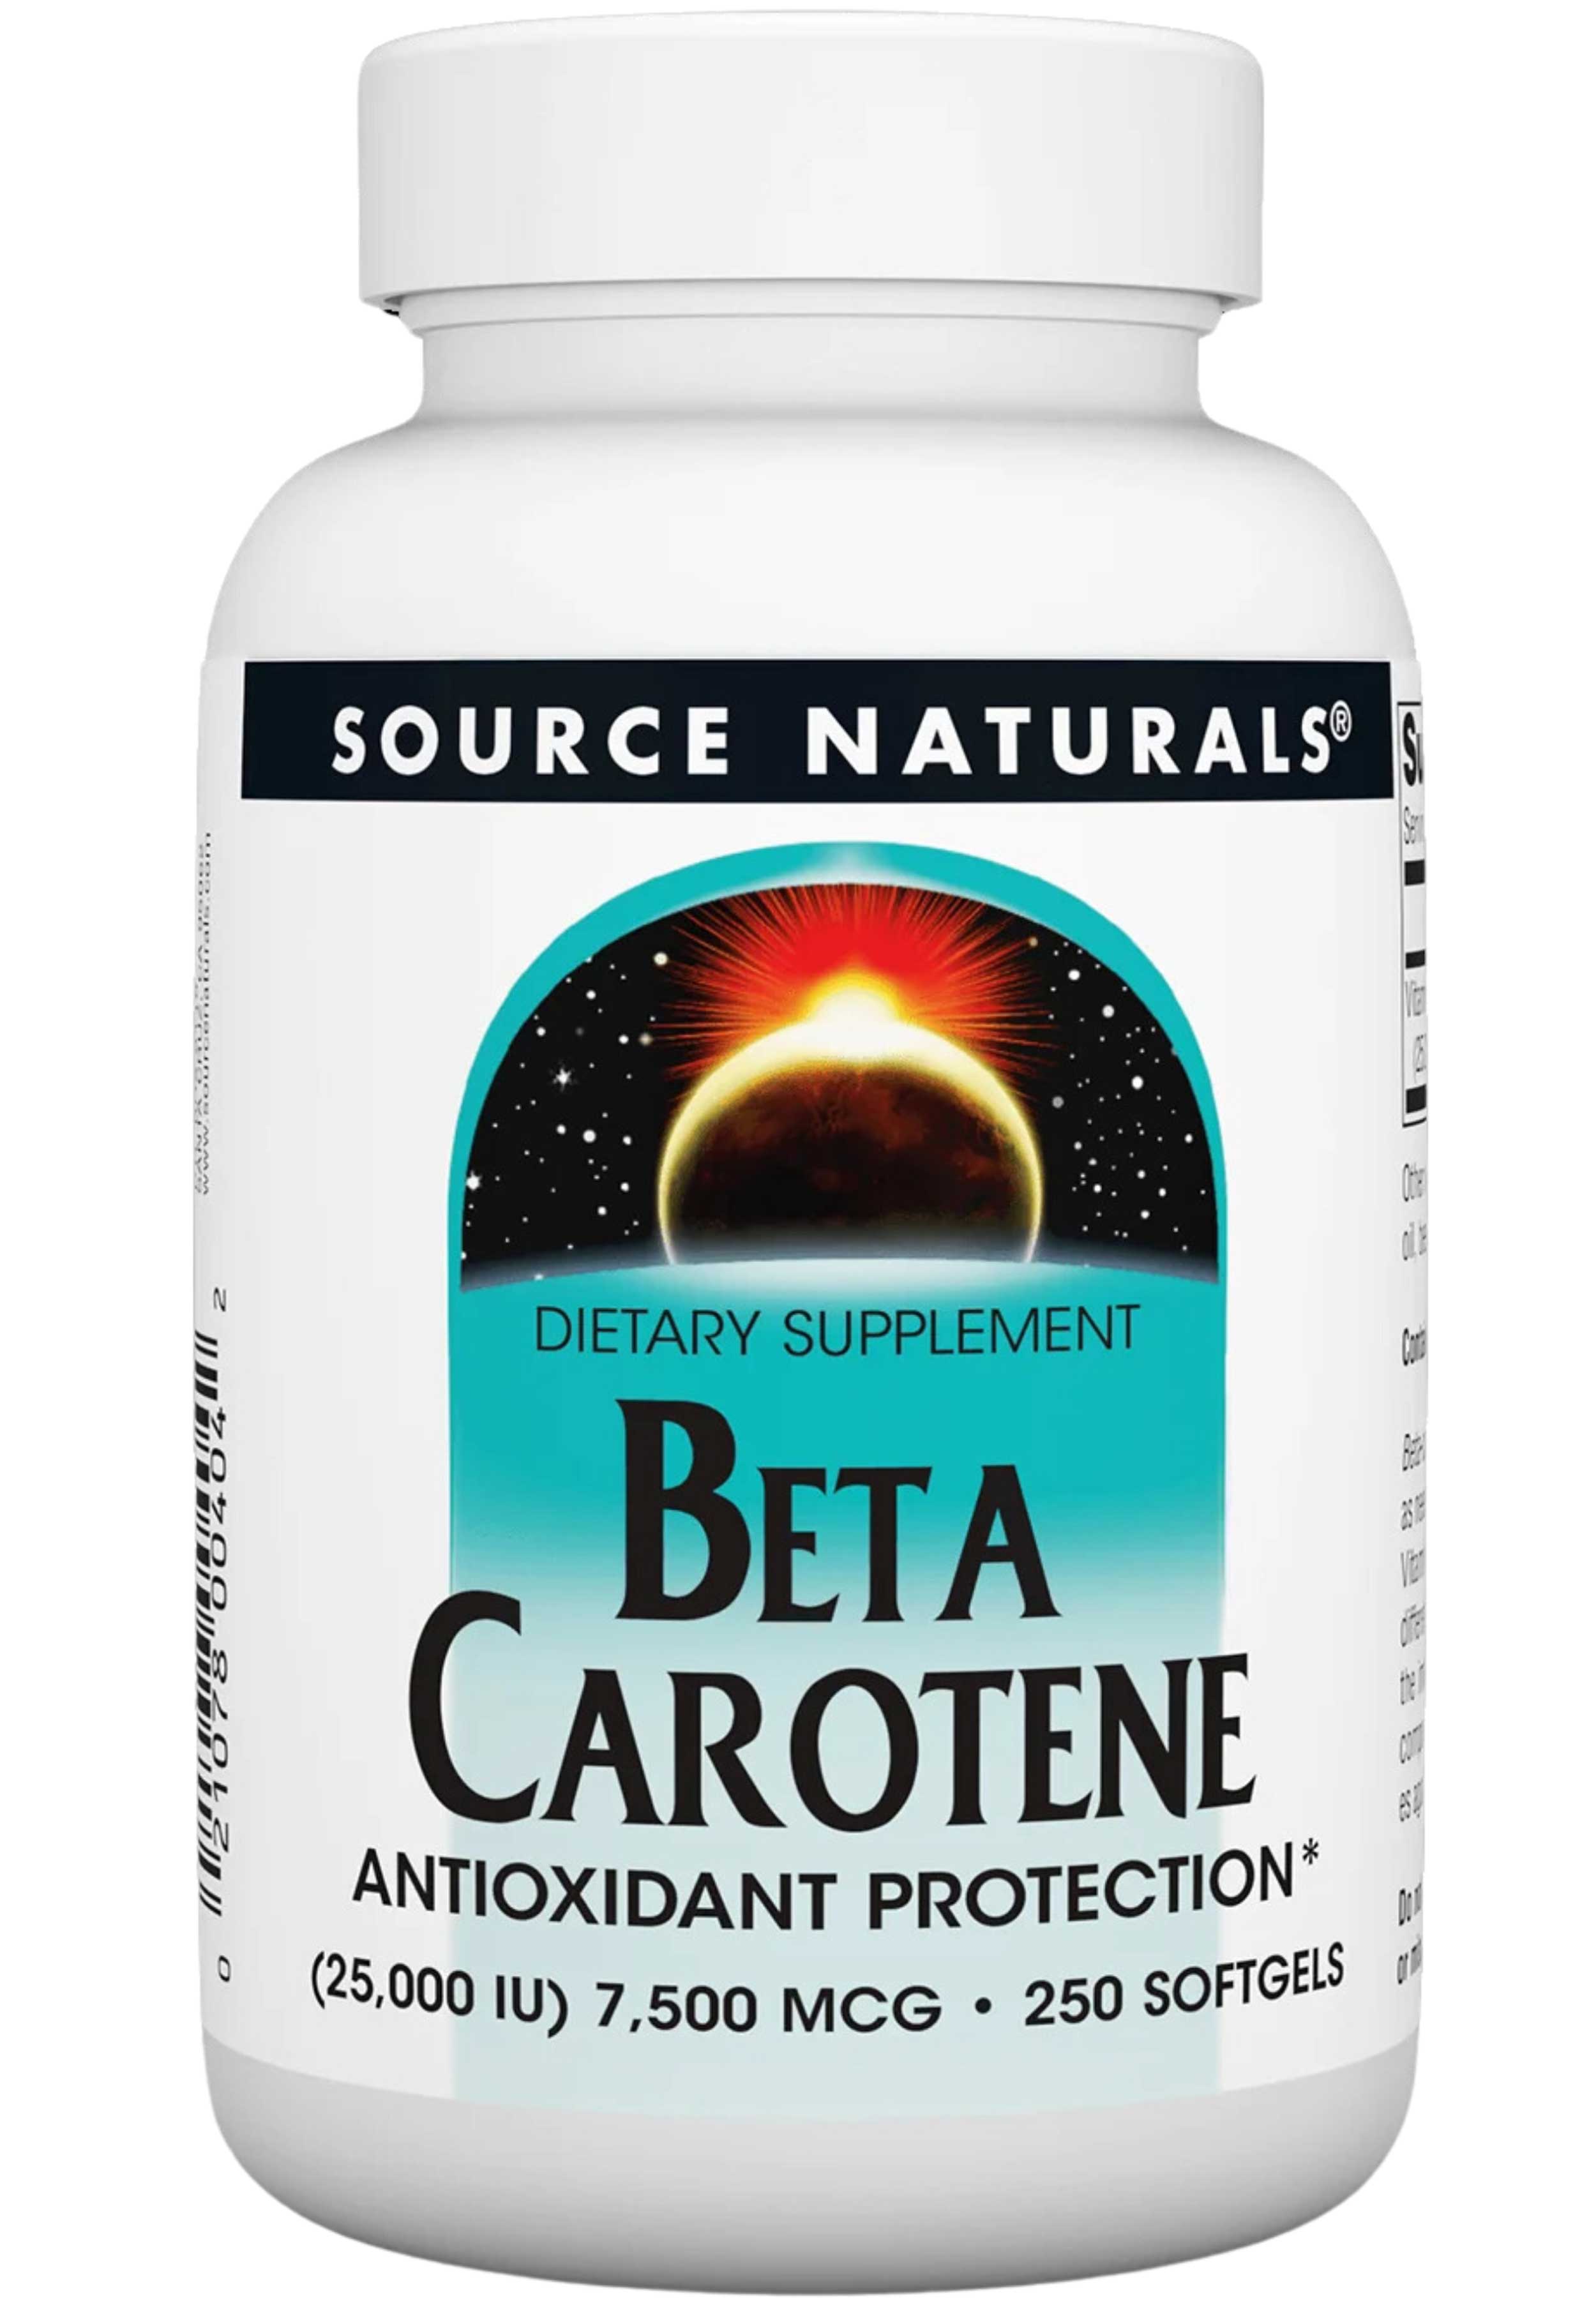 Source Naturals Beta Carotene